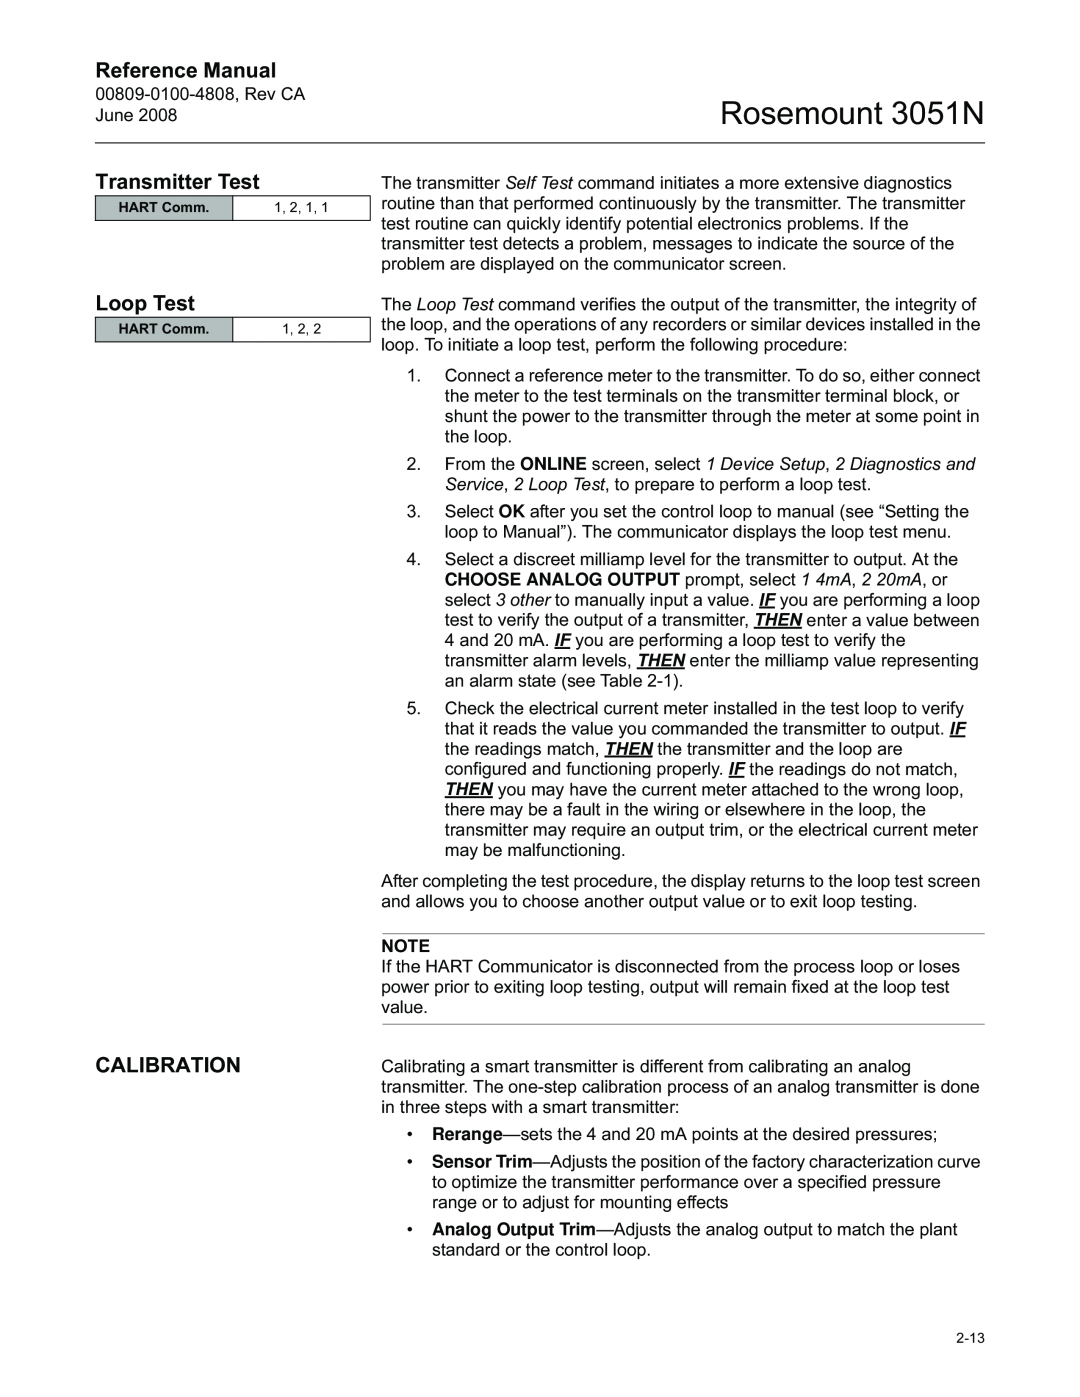 Emerson manual Transmitter Test, Loop Test, Calibration, Rosemount 3051N, Reference Manual 